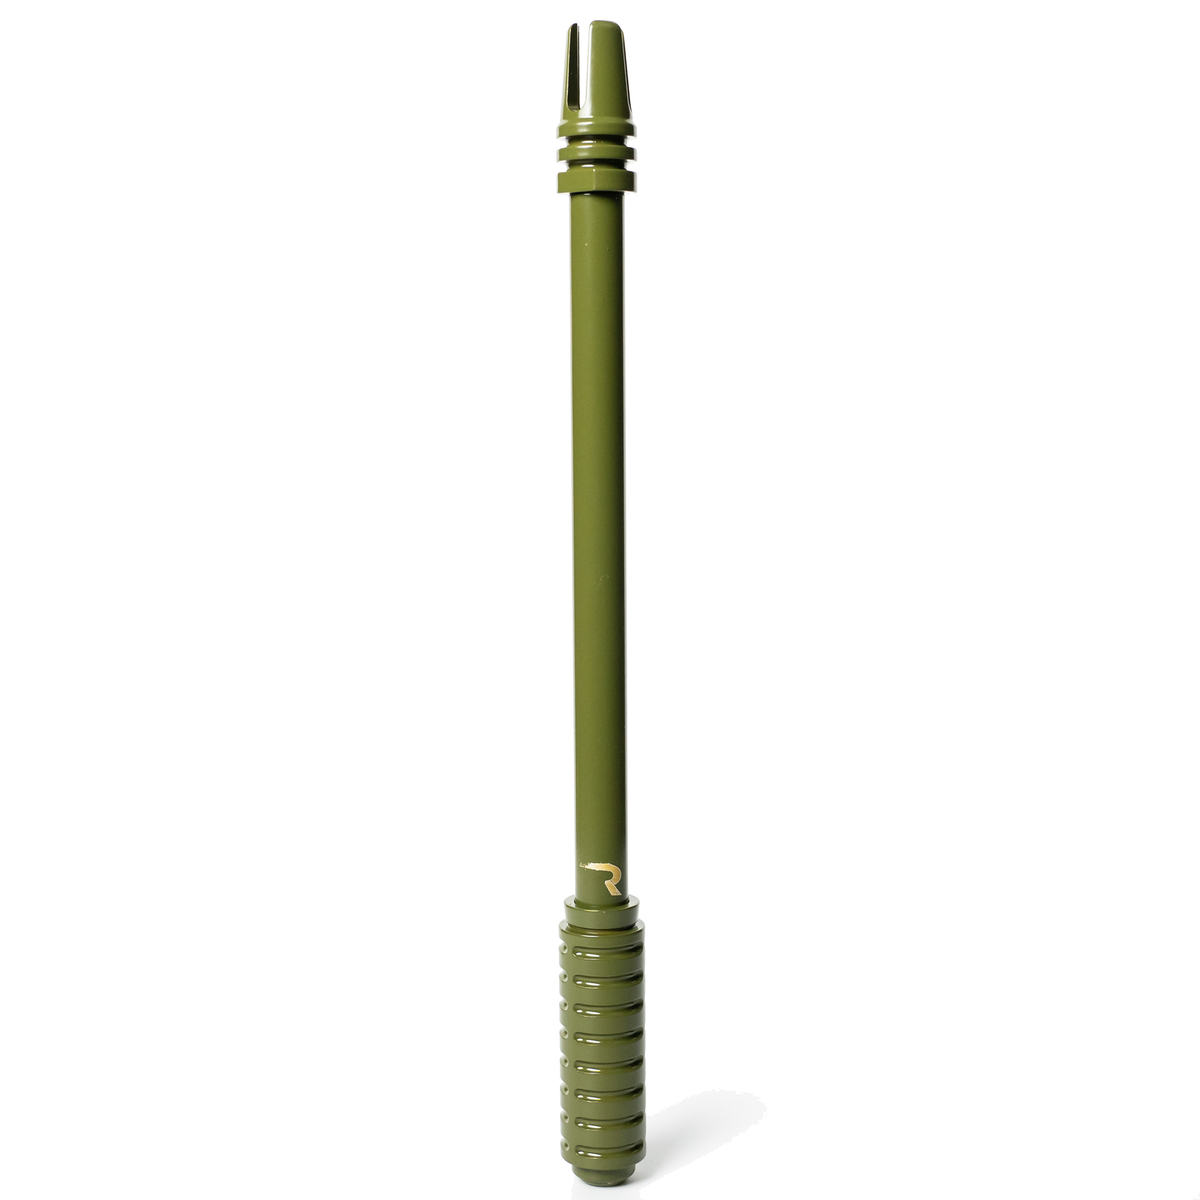 264ANTCBGR - Rifle Barrel 10" Aluminum Combat Antenna w/ 3-Pronged Flash Hider - Universal Fitment Fits All Makes & Models w/ OEM Factory Threaded Antenna - ARMY GREEN